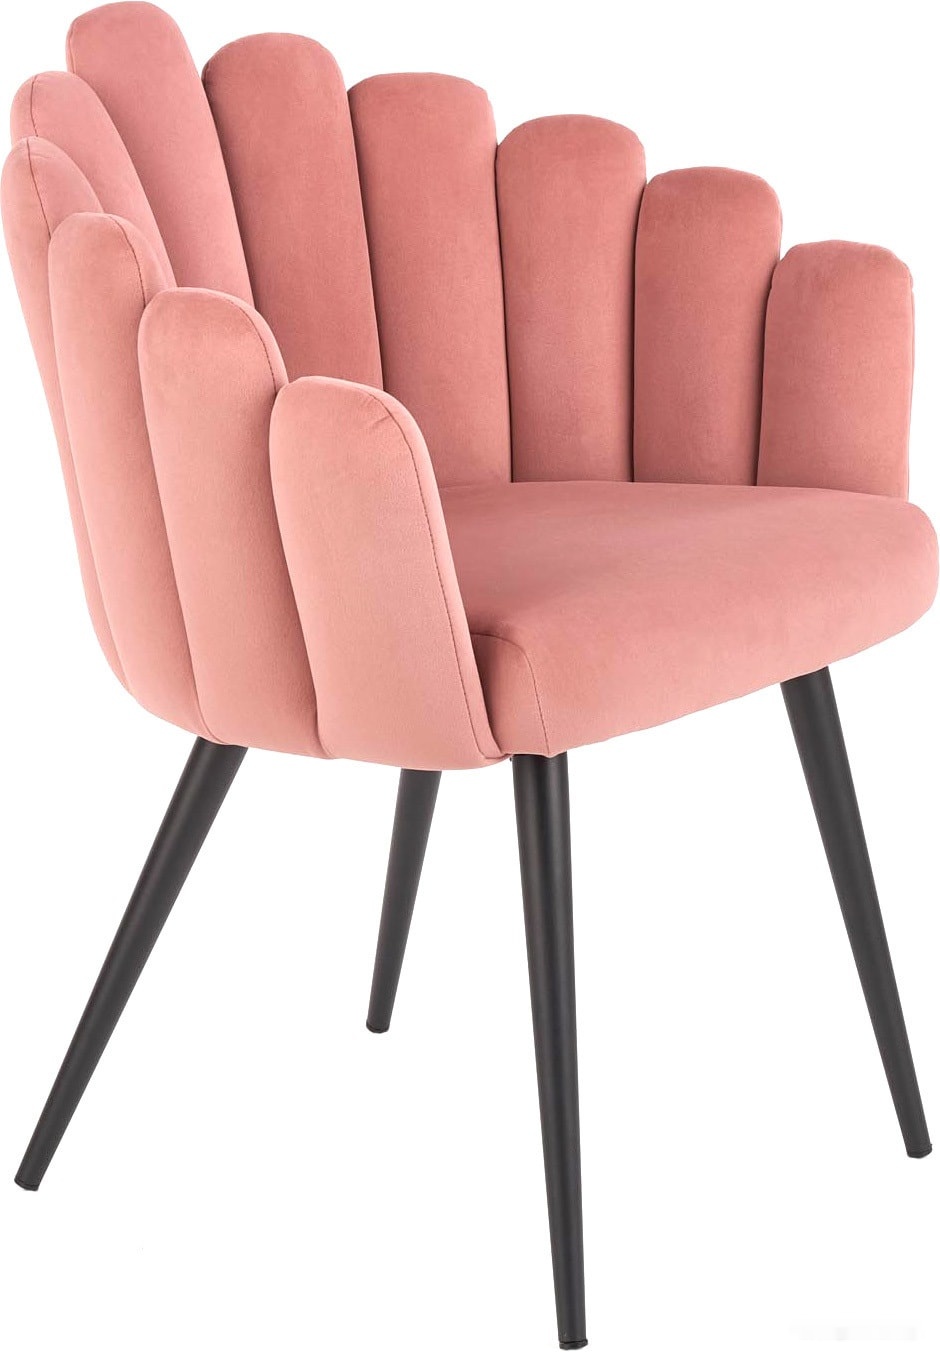 стул с подлокотниками halmar k410 (розовый) (v-ch-k/410-kr-rozowy)